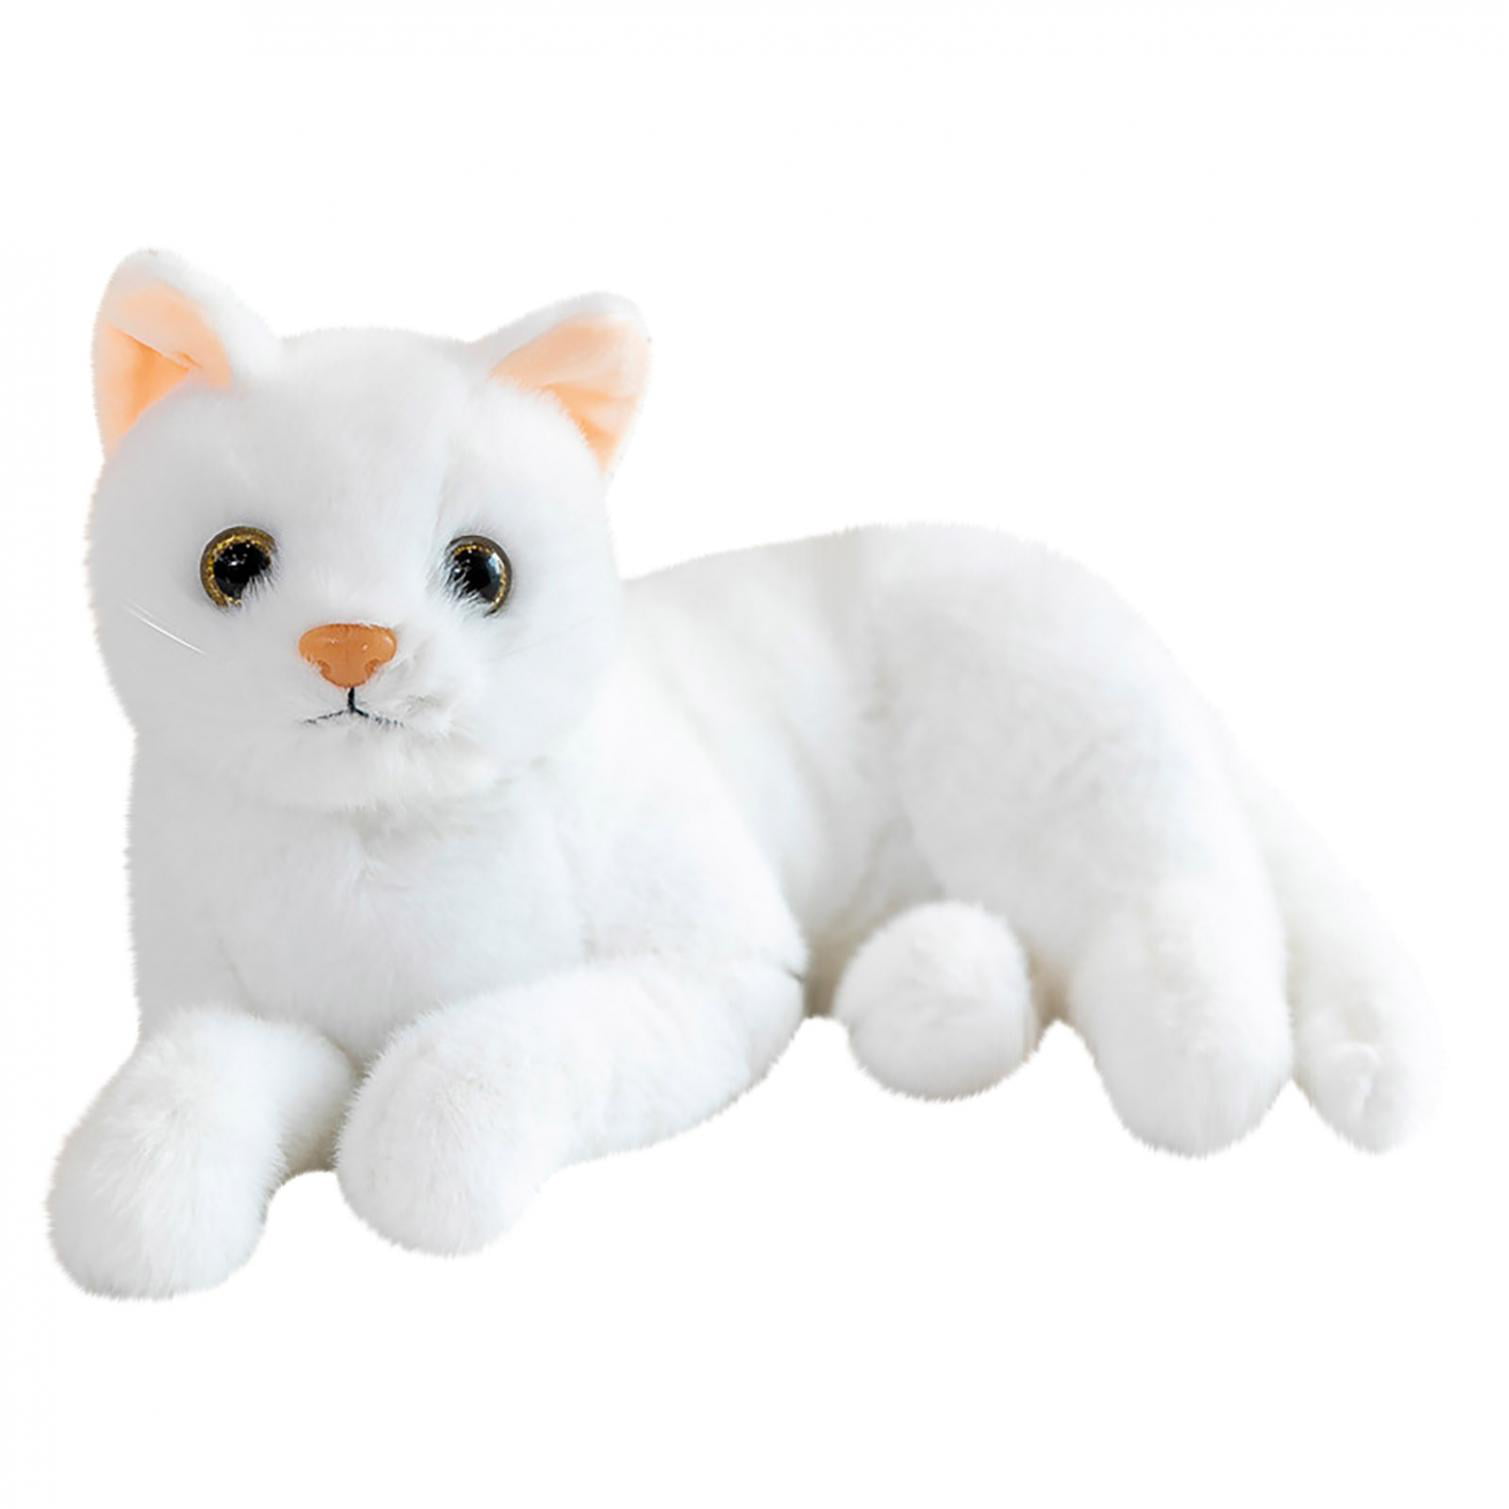 Stuffed Animals Toy For Kids Stuffed Animal Cat Plush Toy Realistic Cuddly Kitten Pet Kitty Soft Small Cat